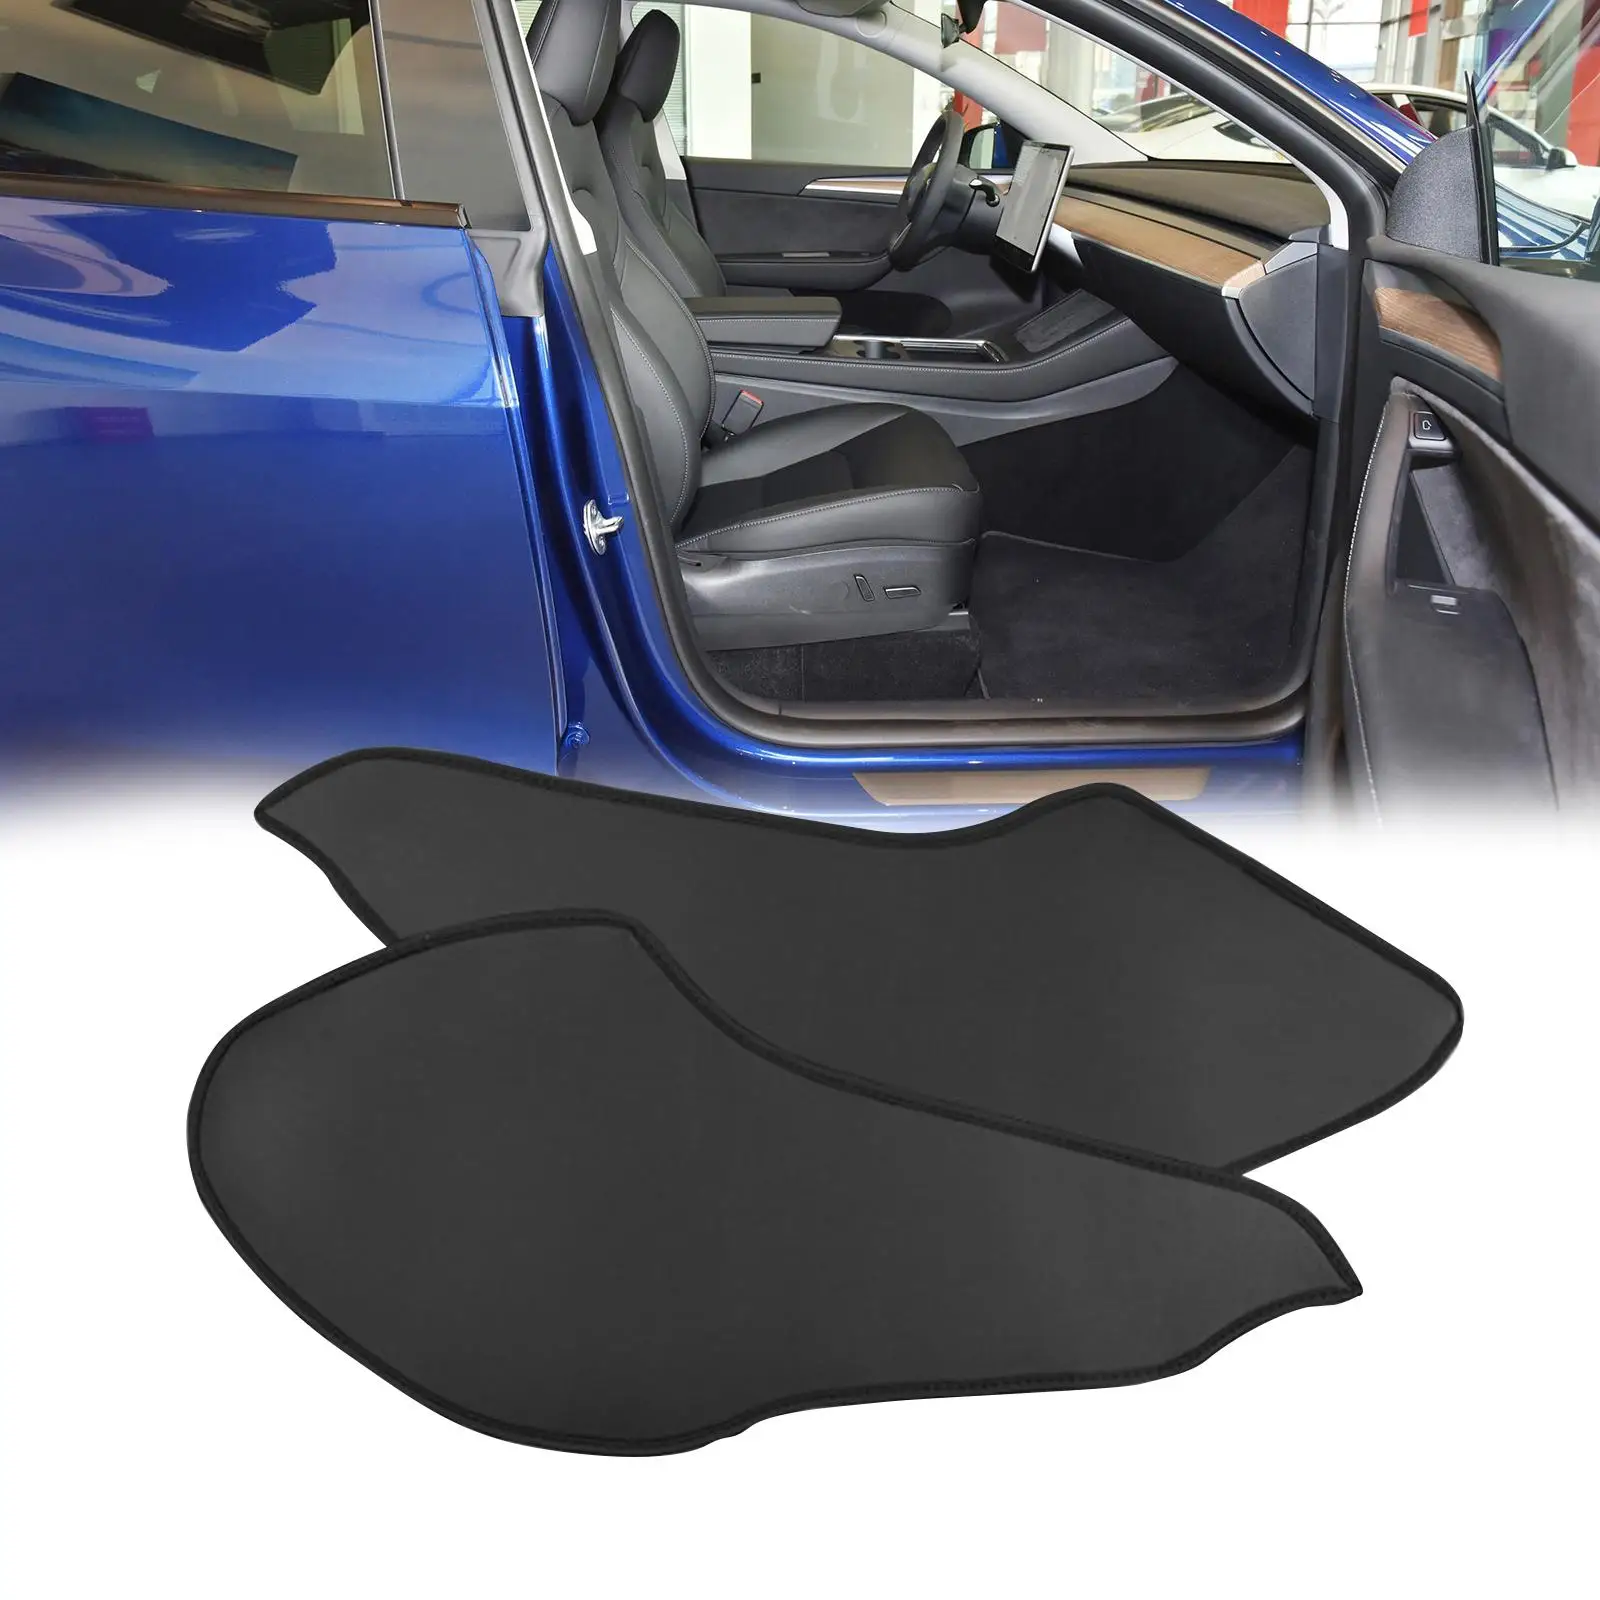 2Pcs Center Console Anti  Anti Dust  Replaces Car Interior Accessories Durable Console Protector Cover